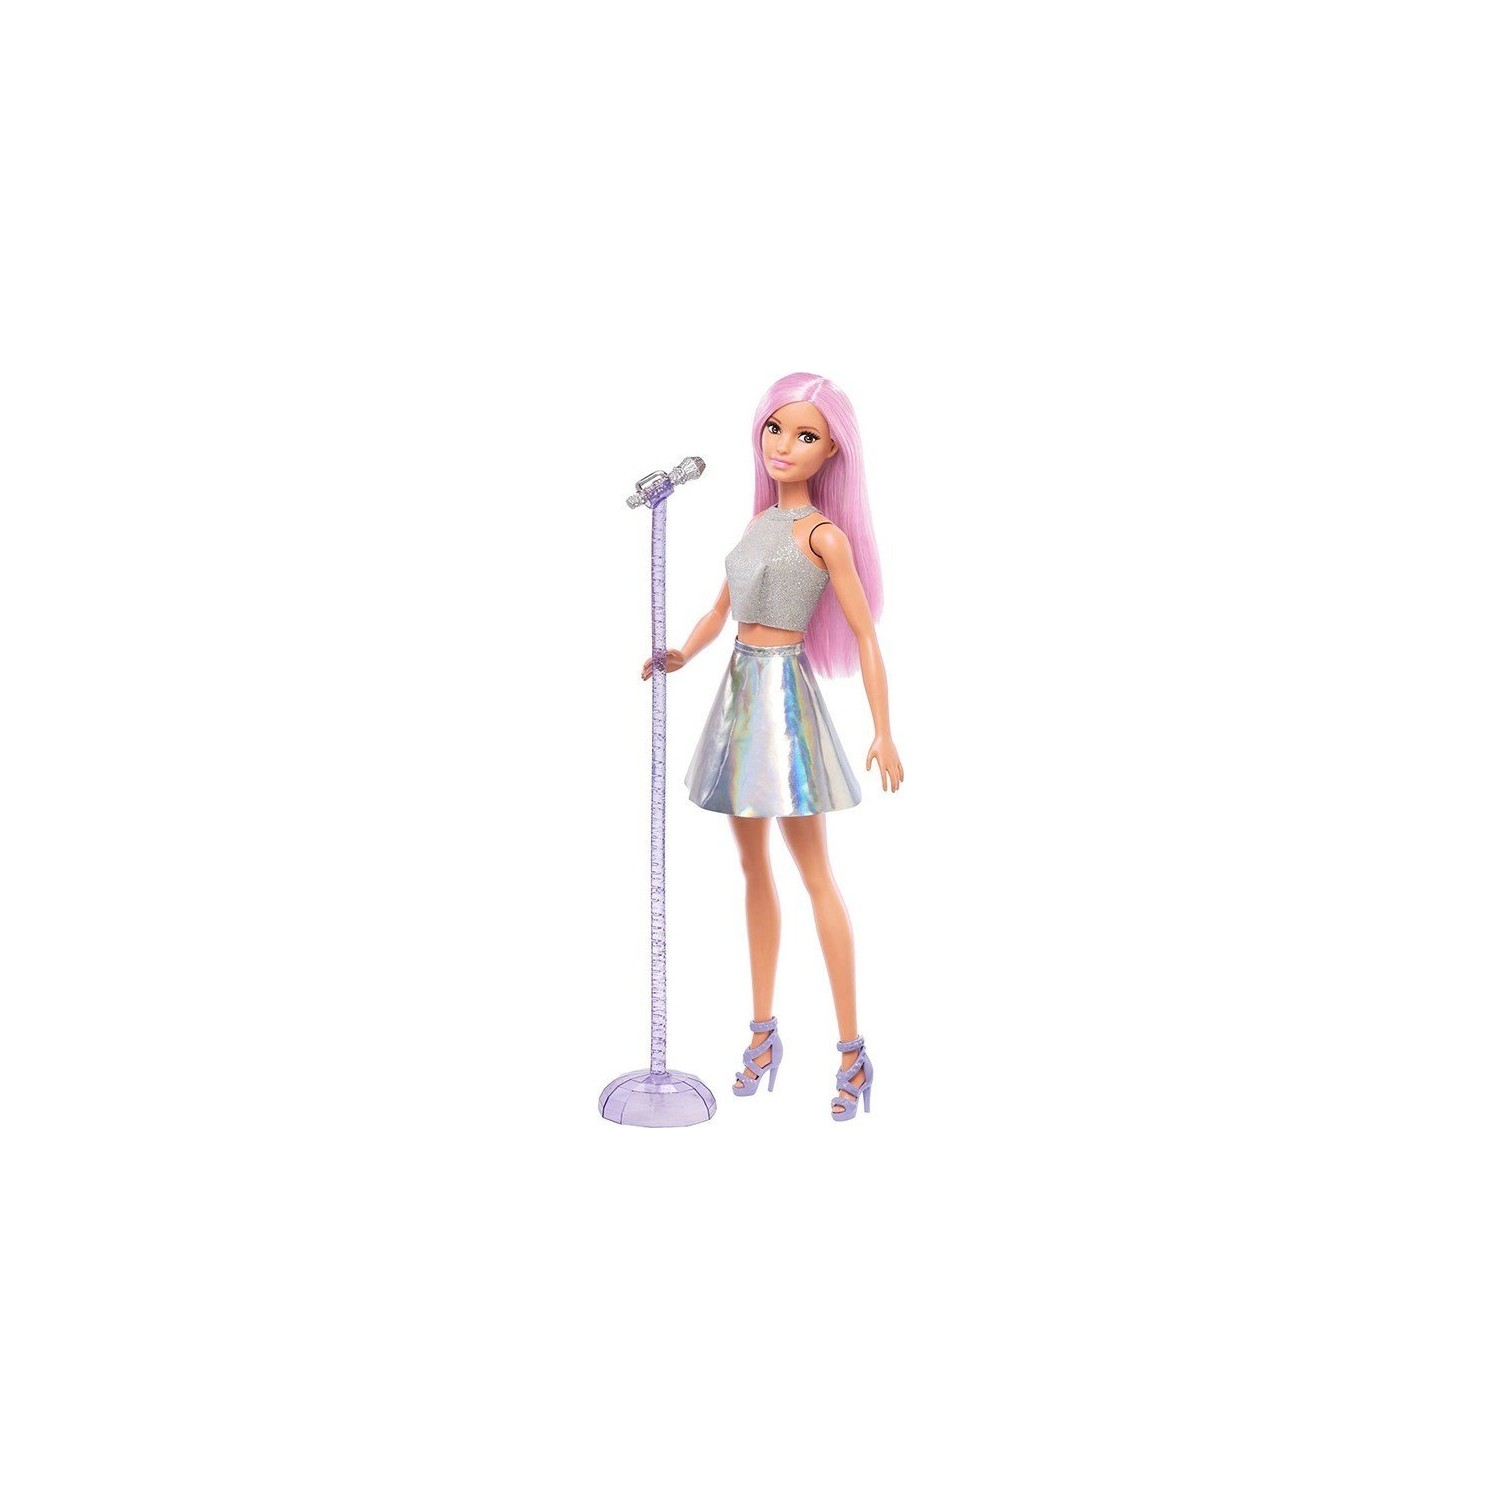 Кукла Barbie Певица кукла барби с одеждой barbie dream careers карьера мечты